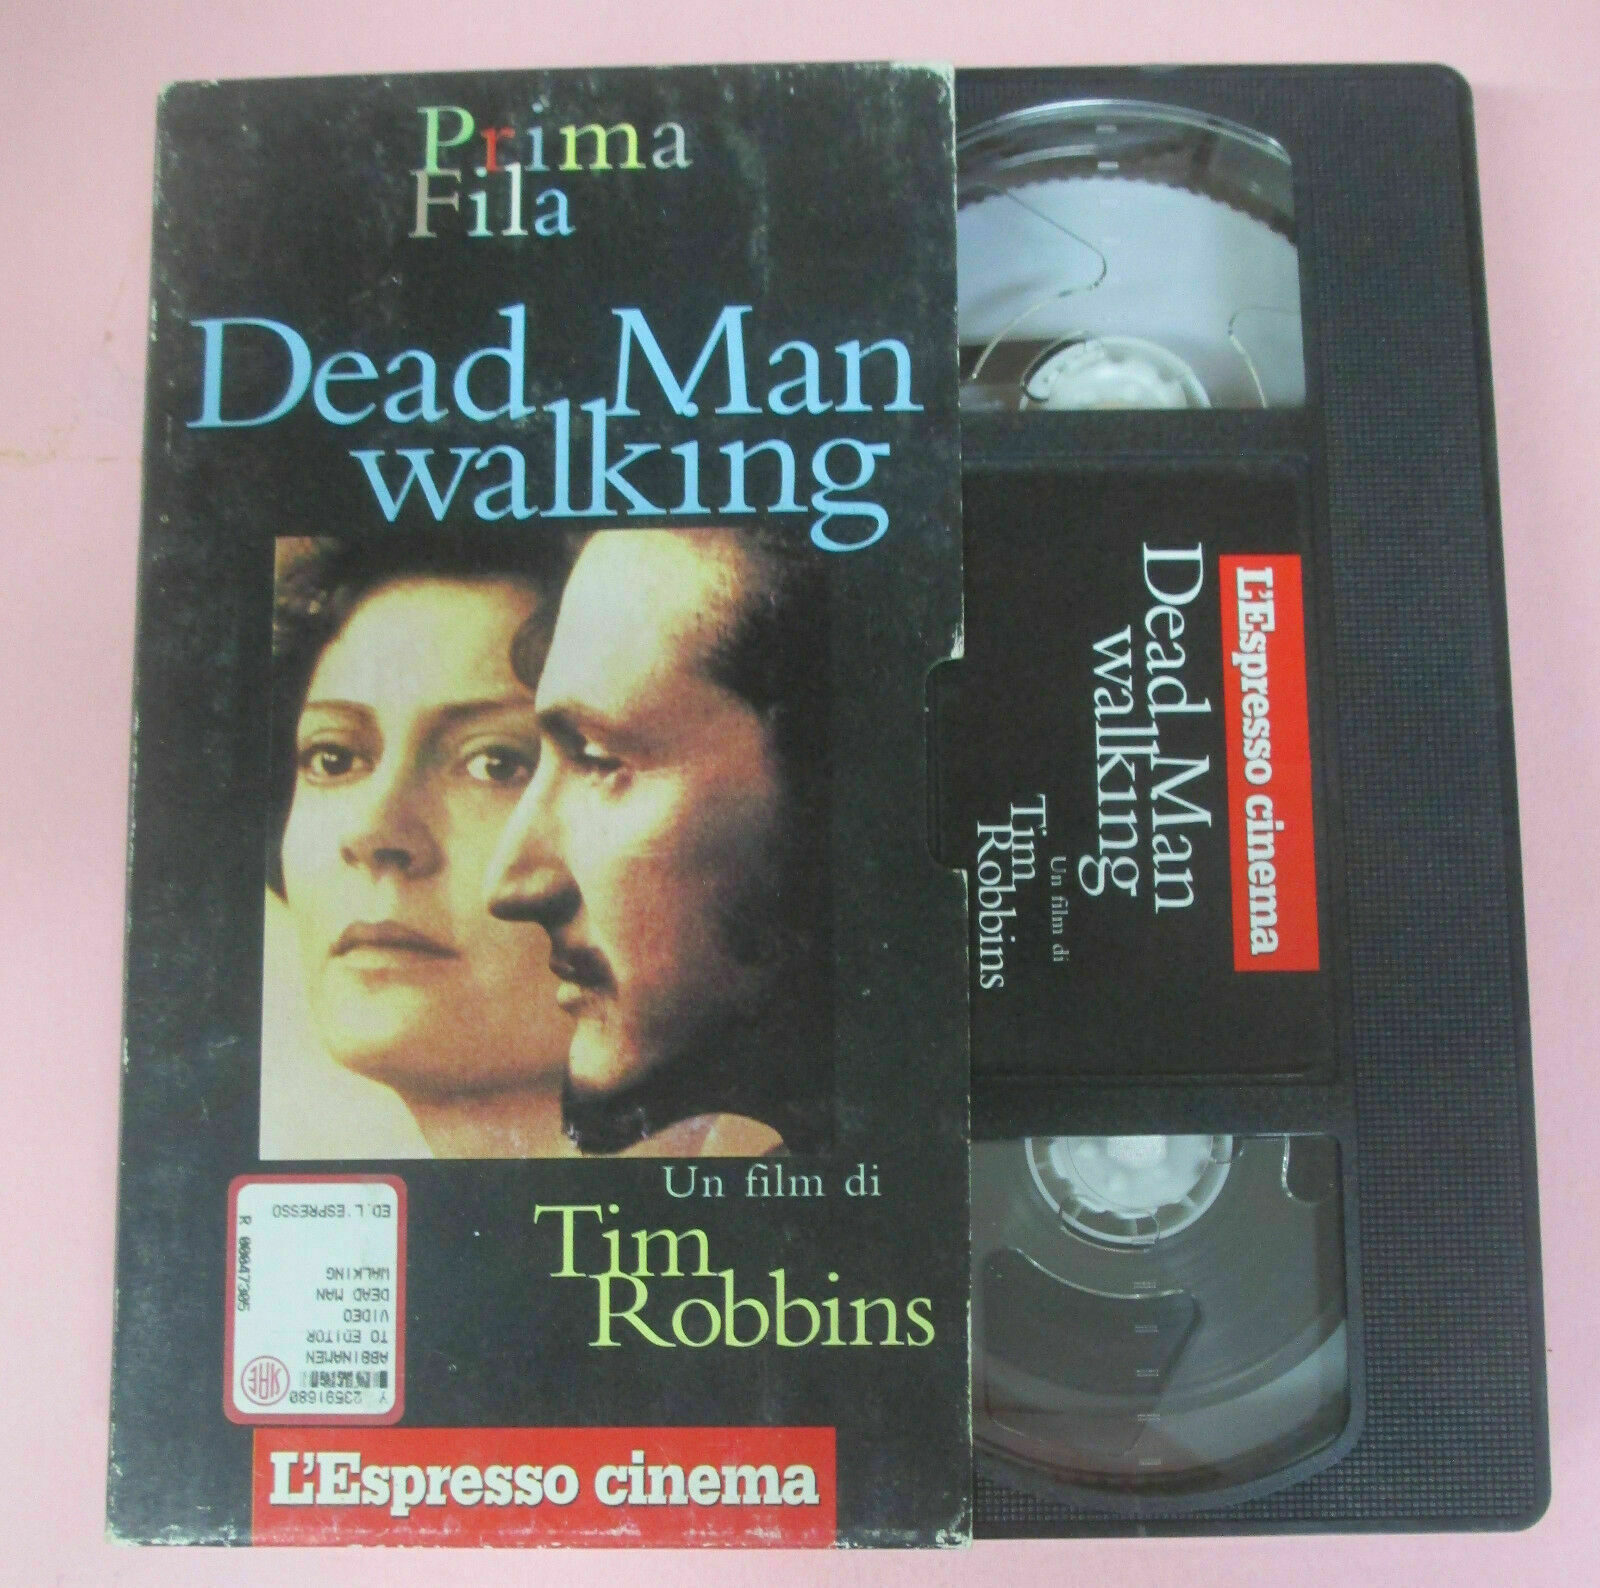 Dead Man Walking -Vhs -1995- l'espresso cinema -F